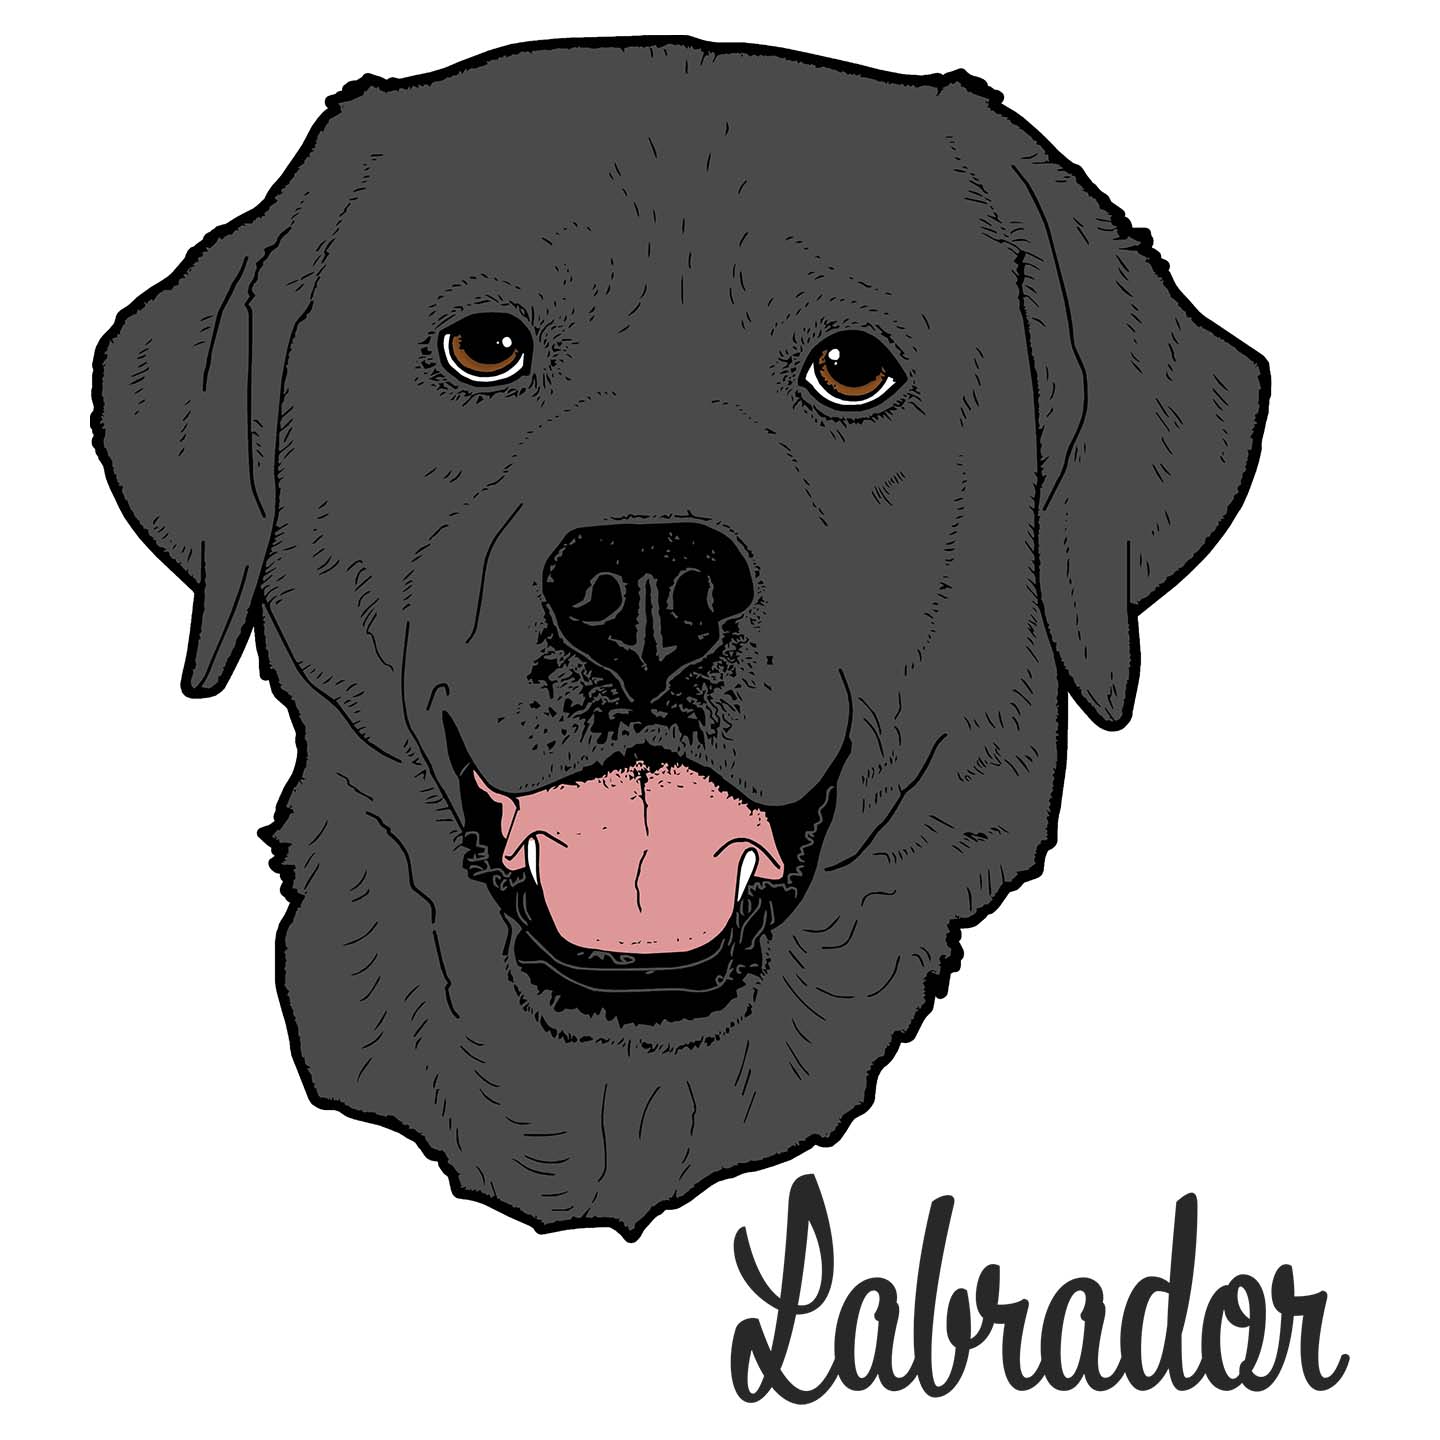 Black Labrador Headshot - Women's Fitted T-Shirt